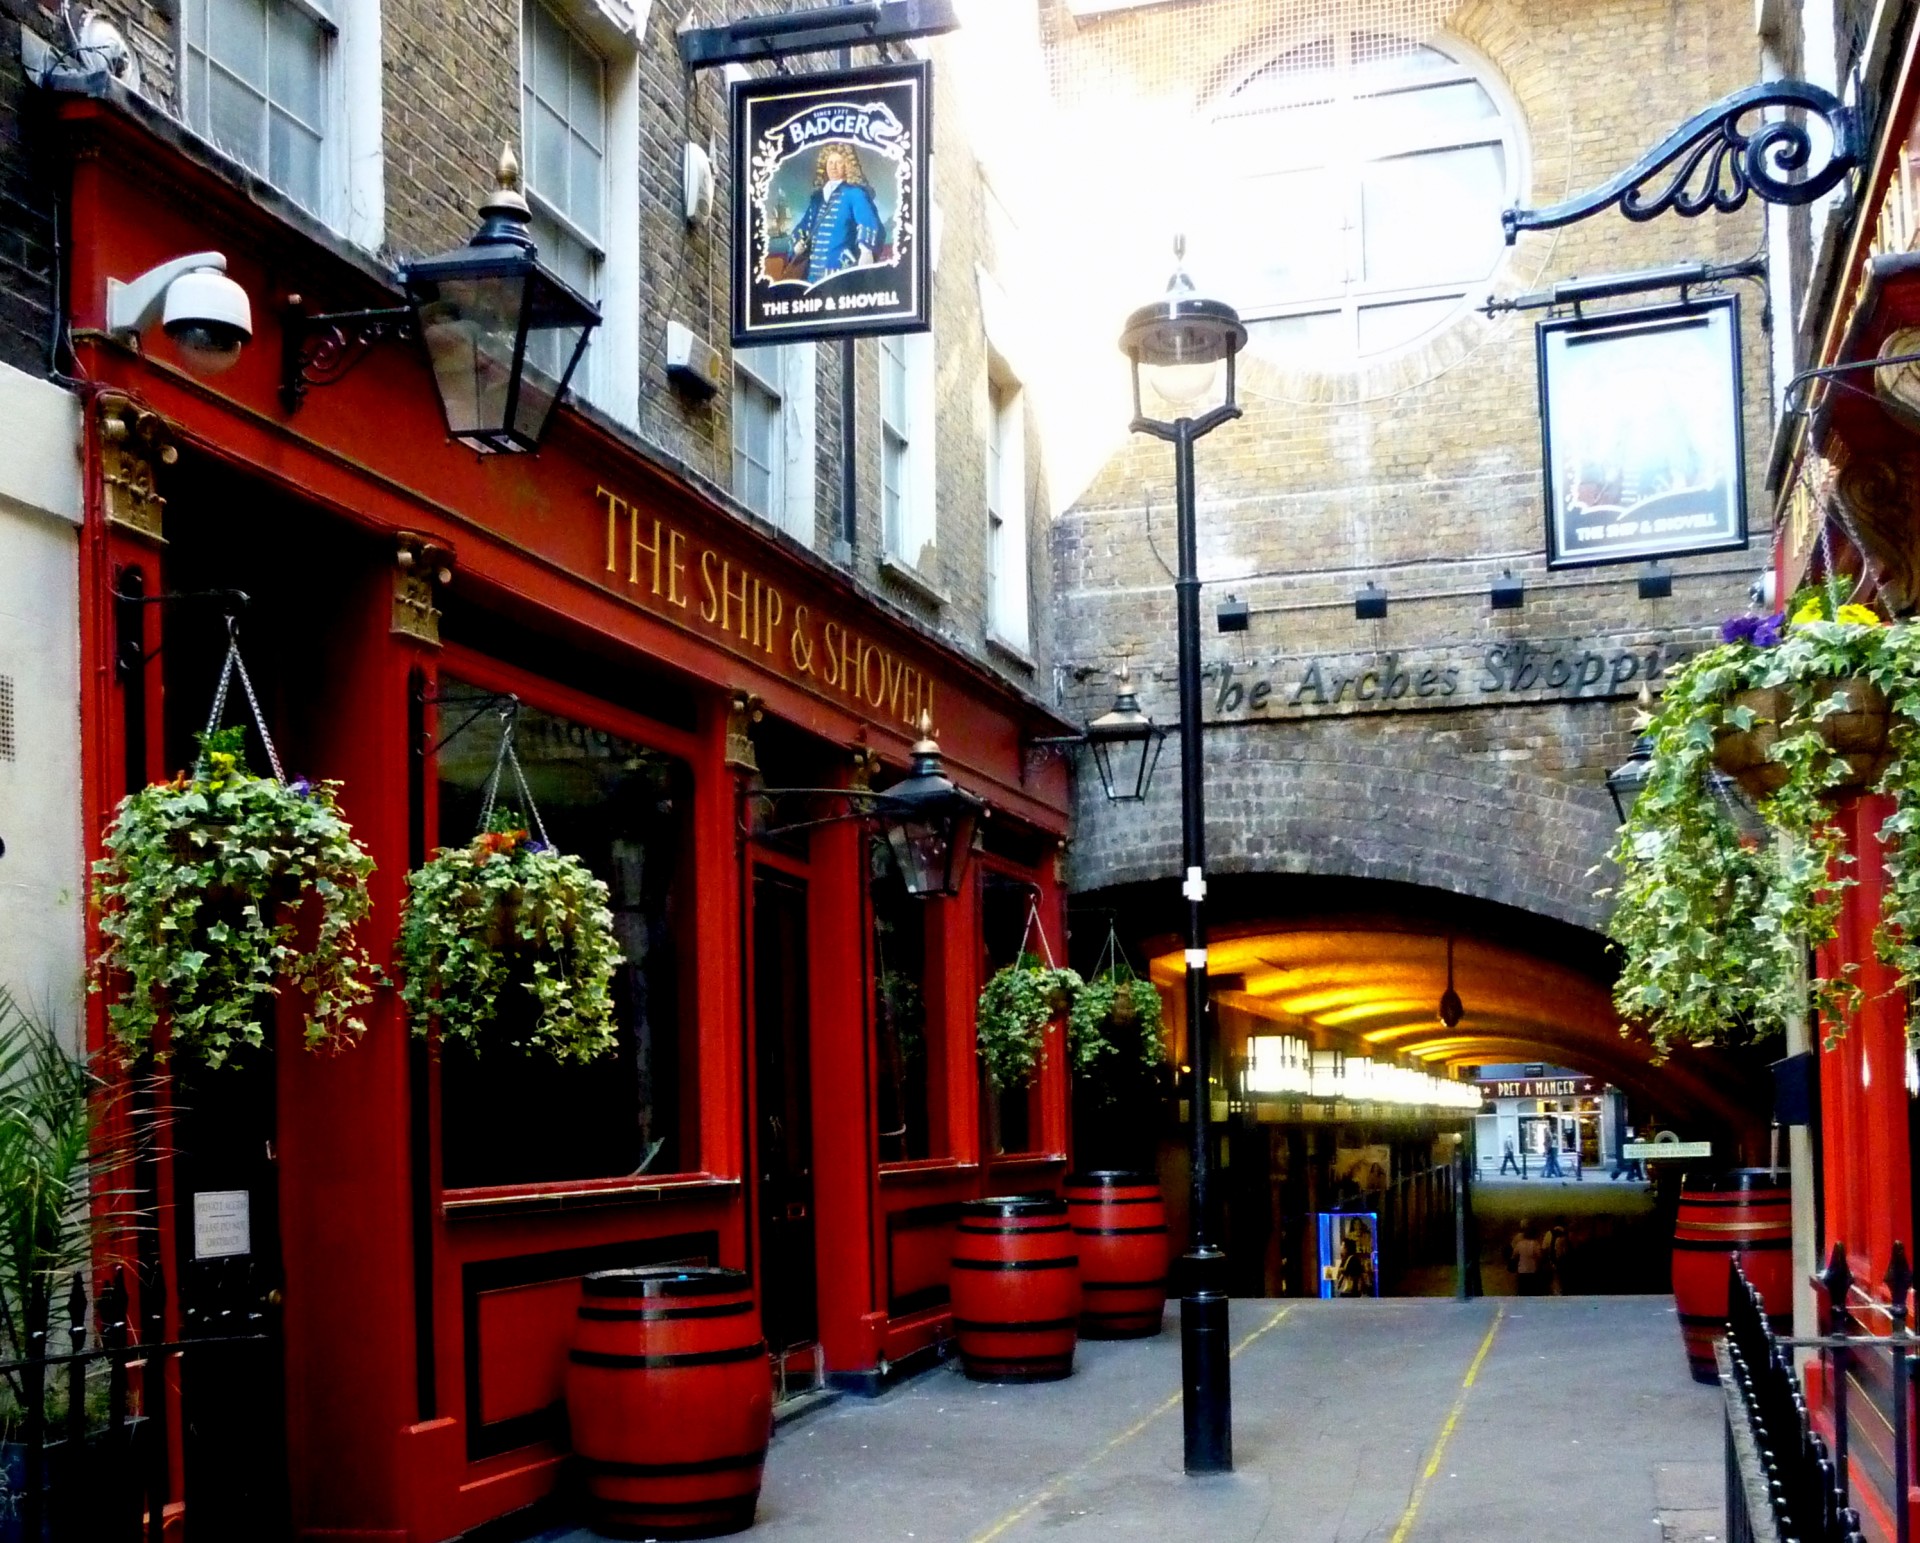 A pub in central London not far from Trafalgar Square